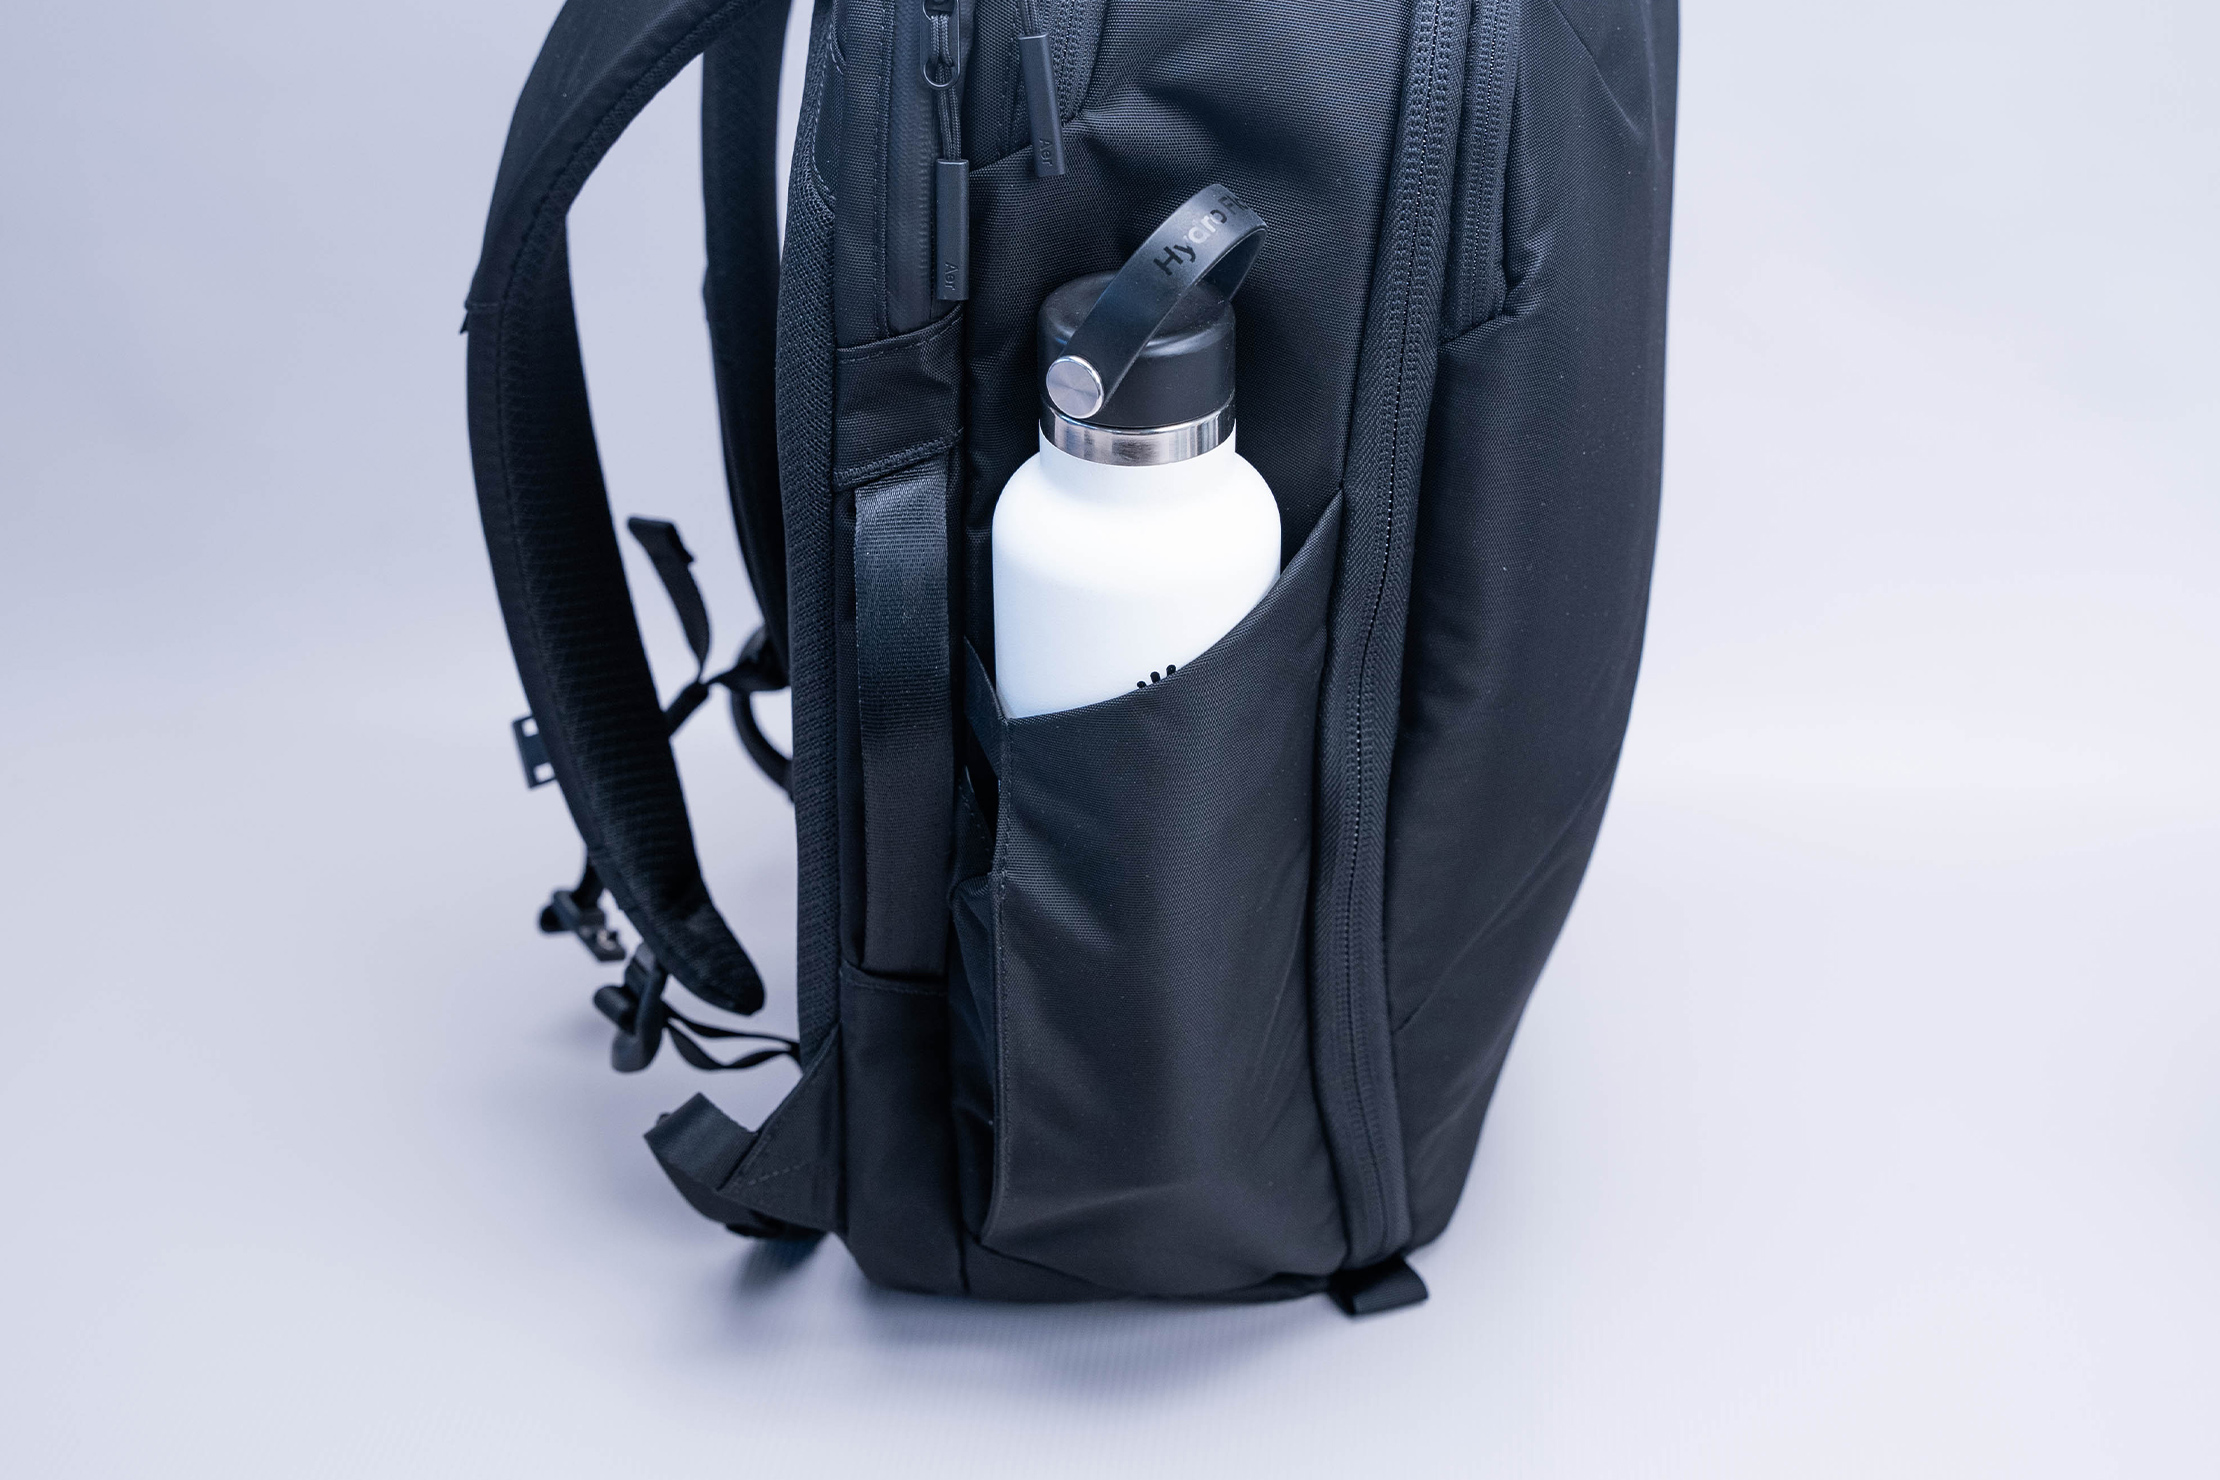 Aer Pro Pack 24L Water Bottle